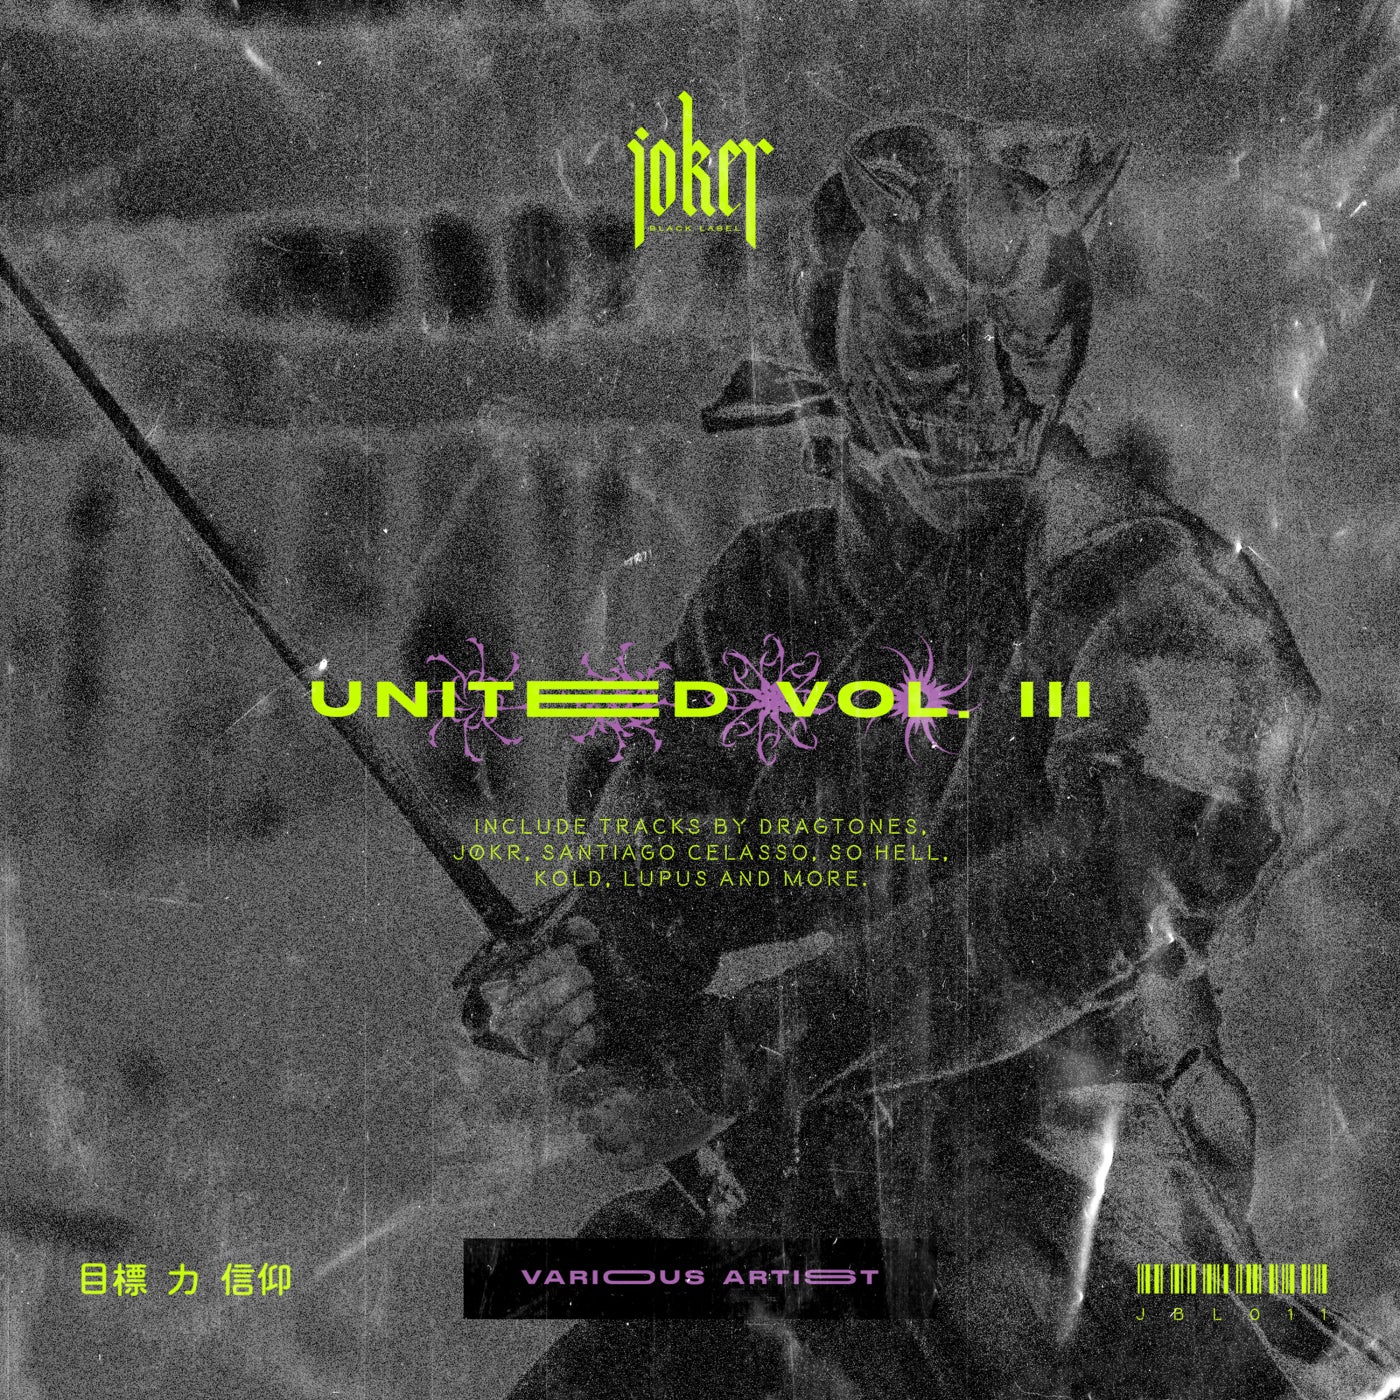 United Vol. III